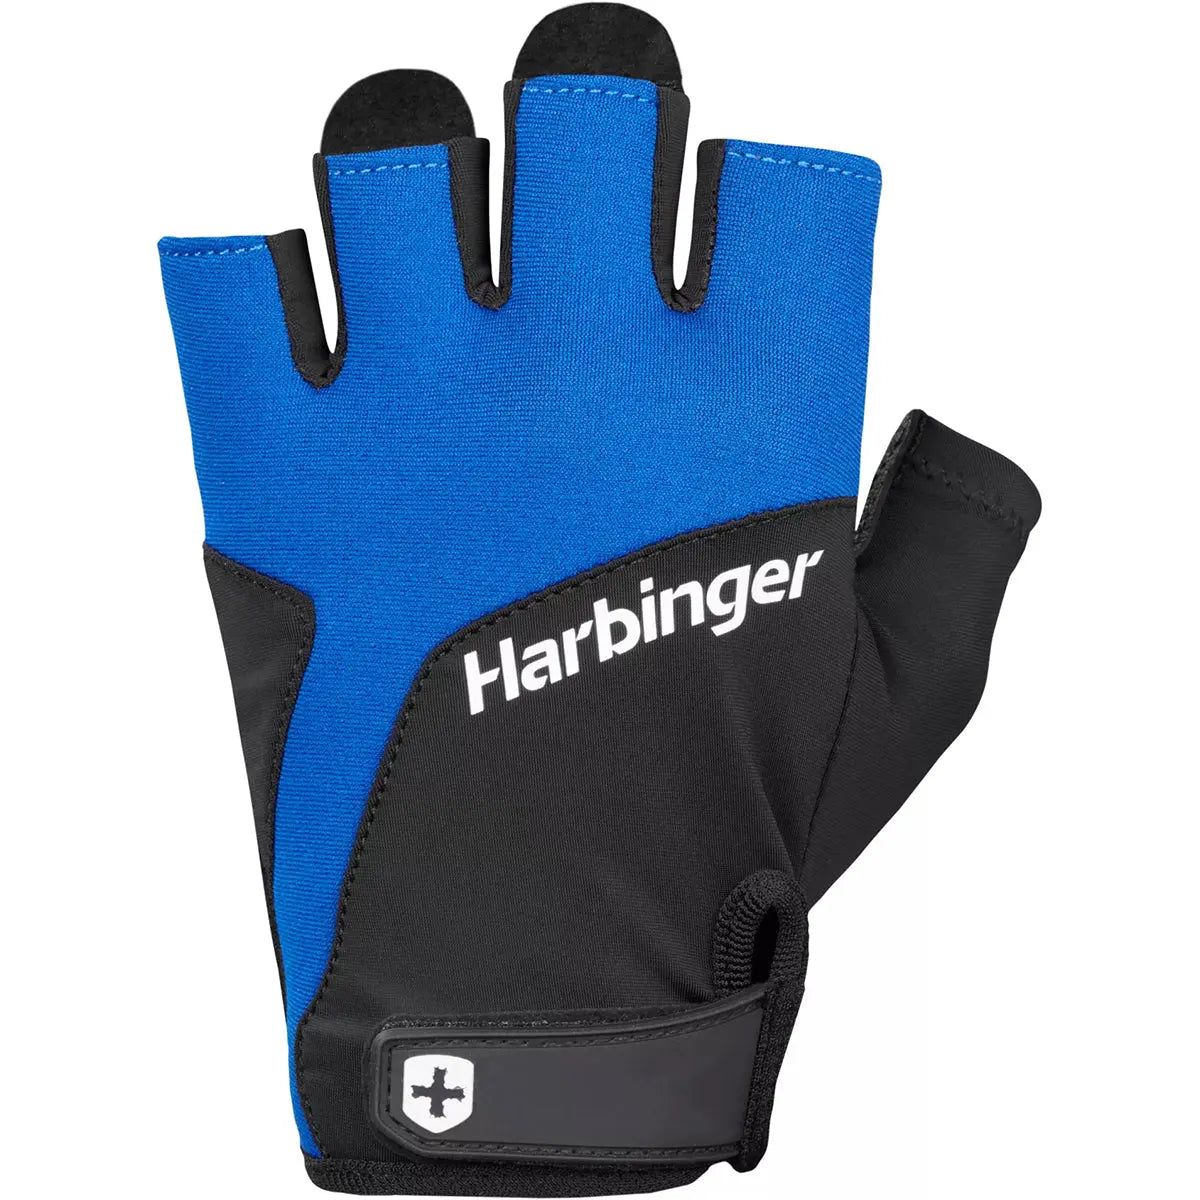 Harbinger Men's Pro Weight Lifting Glove, Blue